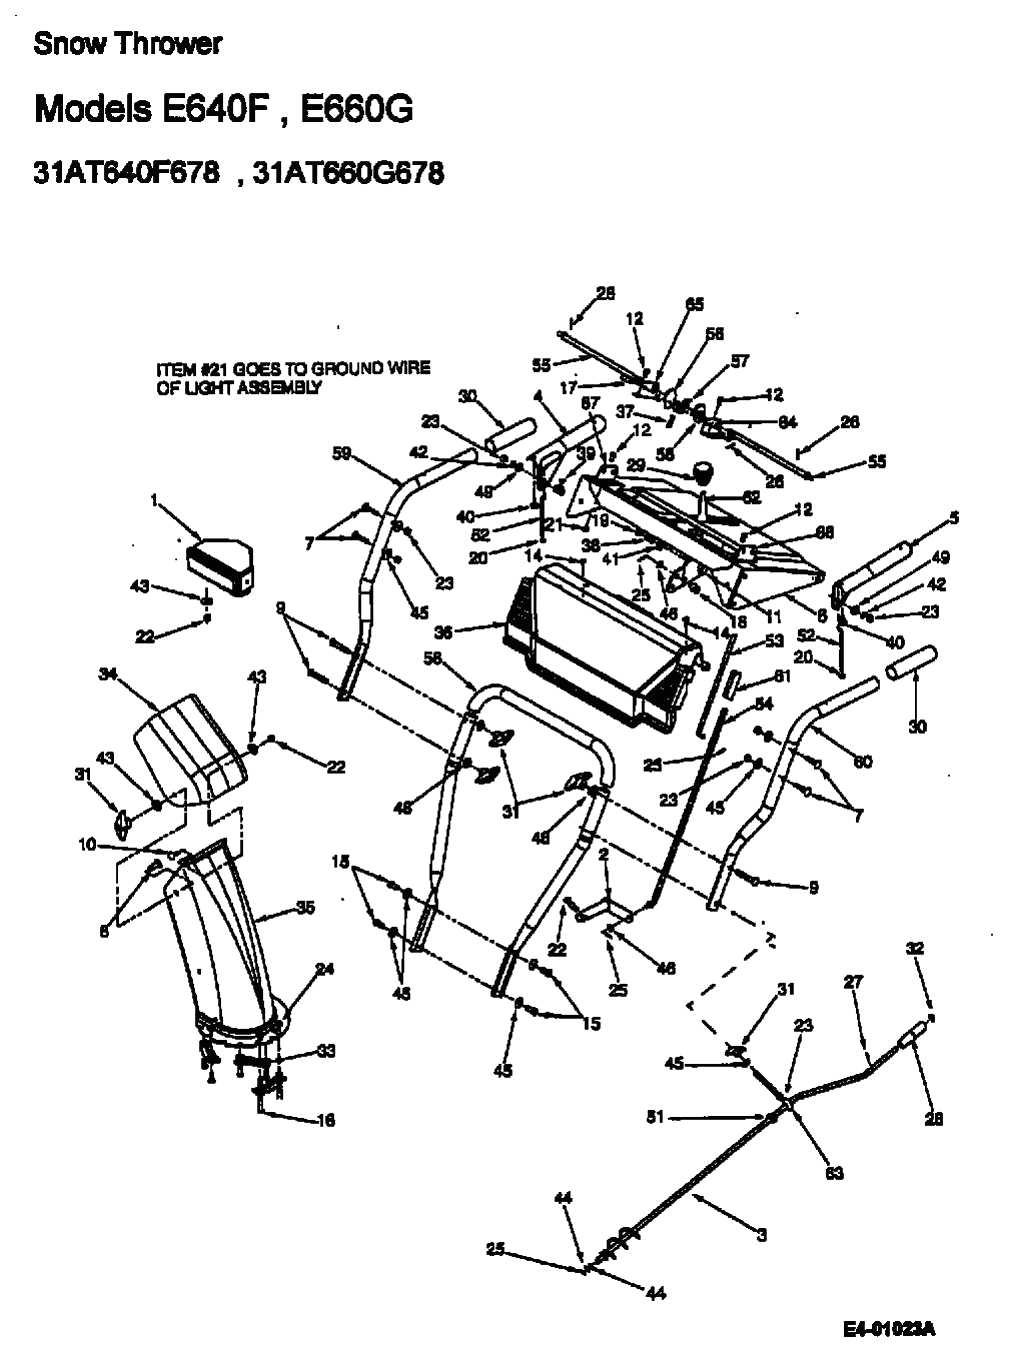 MTD Артикул 31AE660G678 (год выпуска 2001). Приборная панель, Разгрузочный желоб, ручка